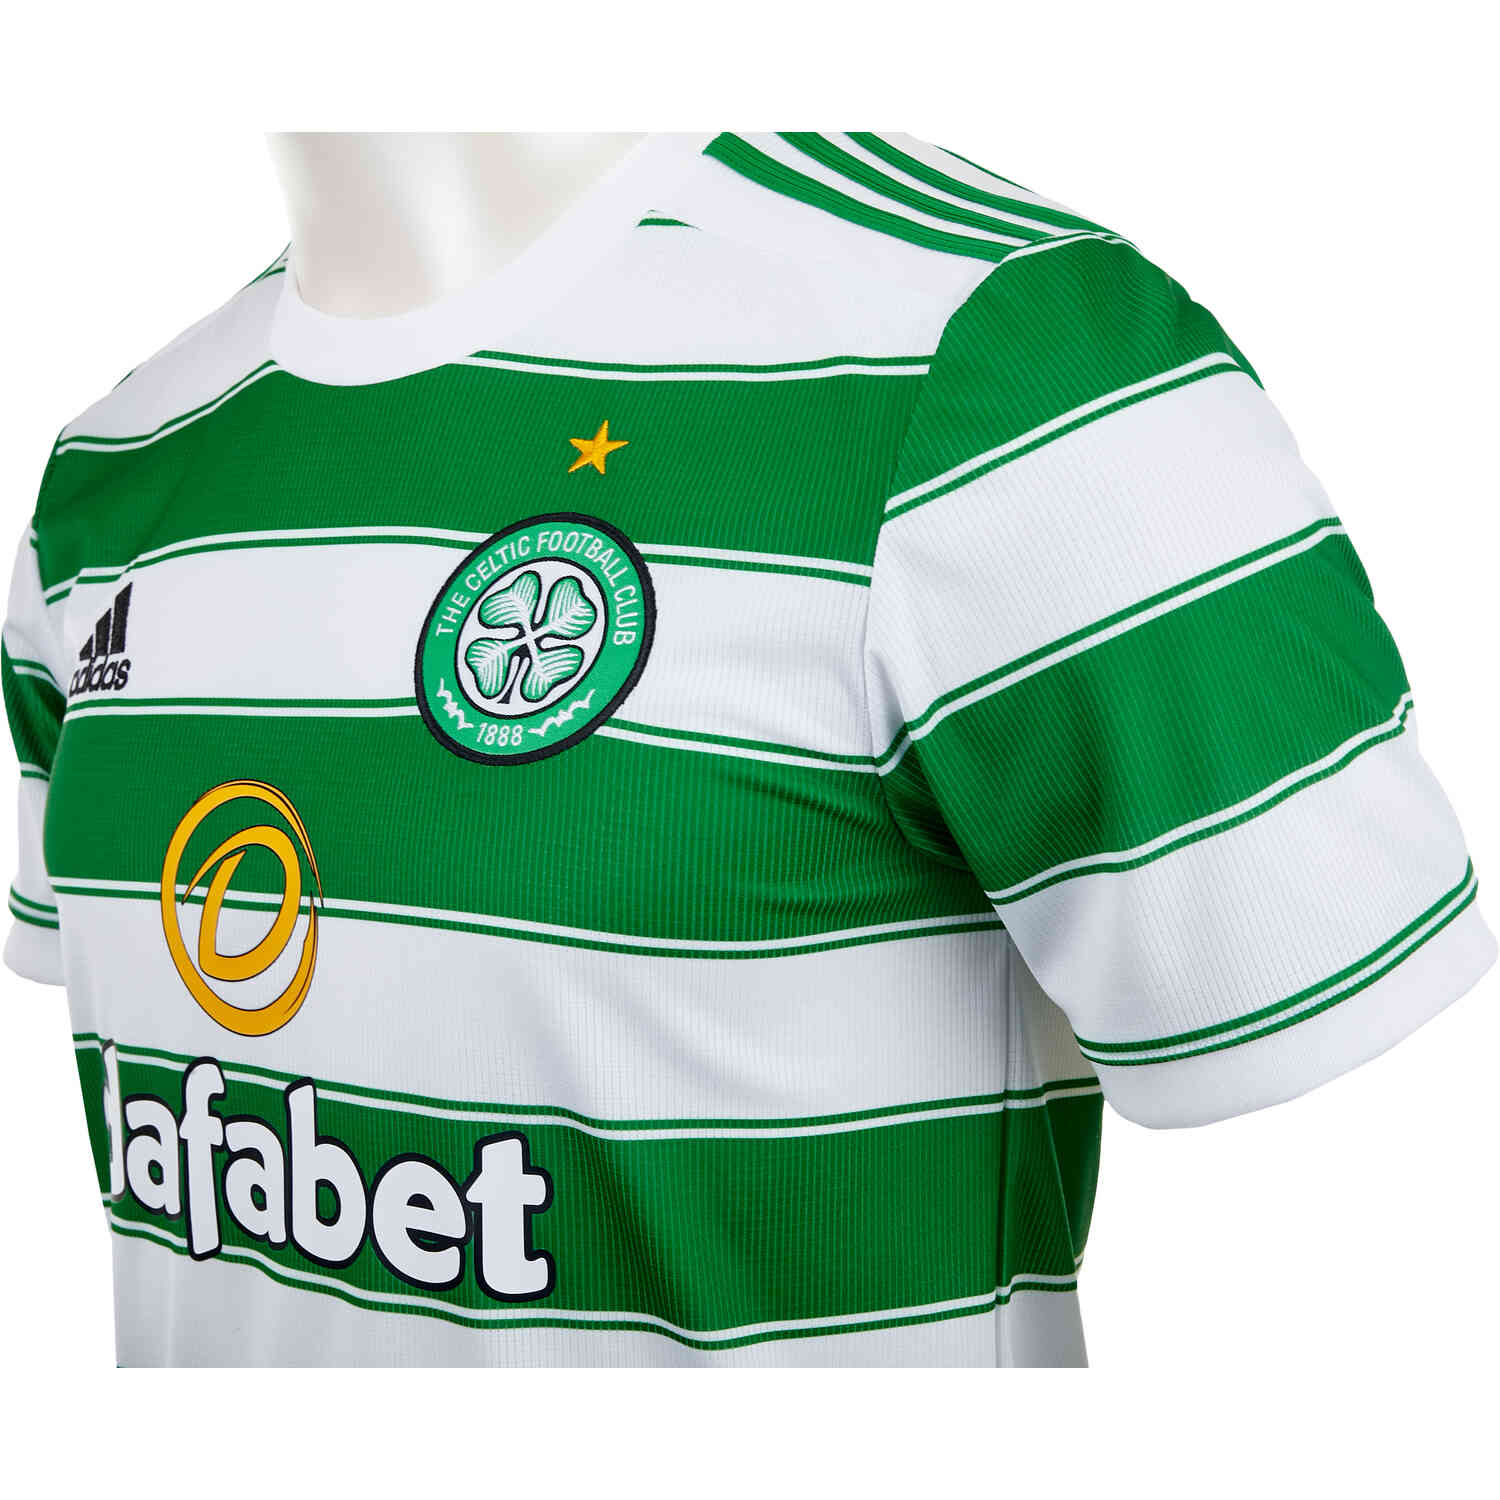 ADIDAS Men's adidas Celtic FC 21-22 Home Soccer Jersey